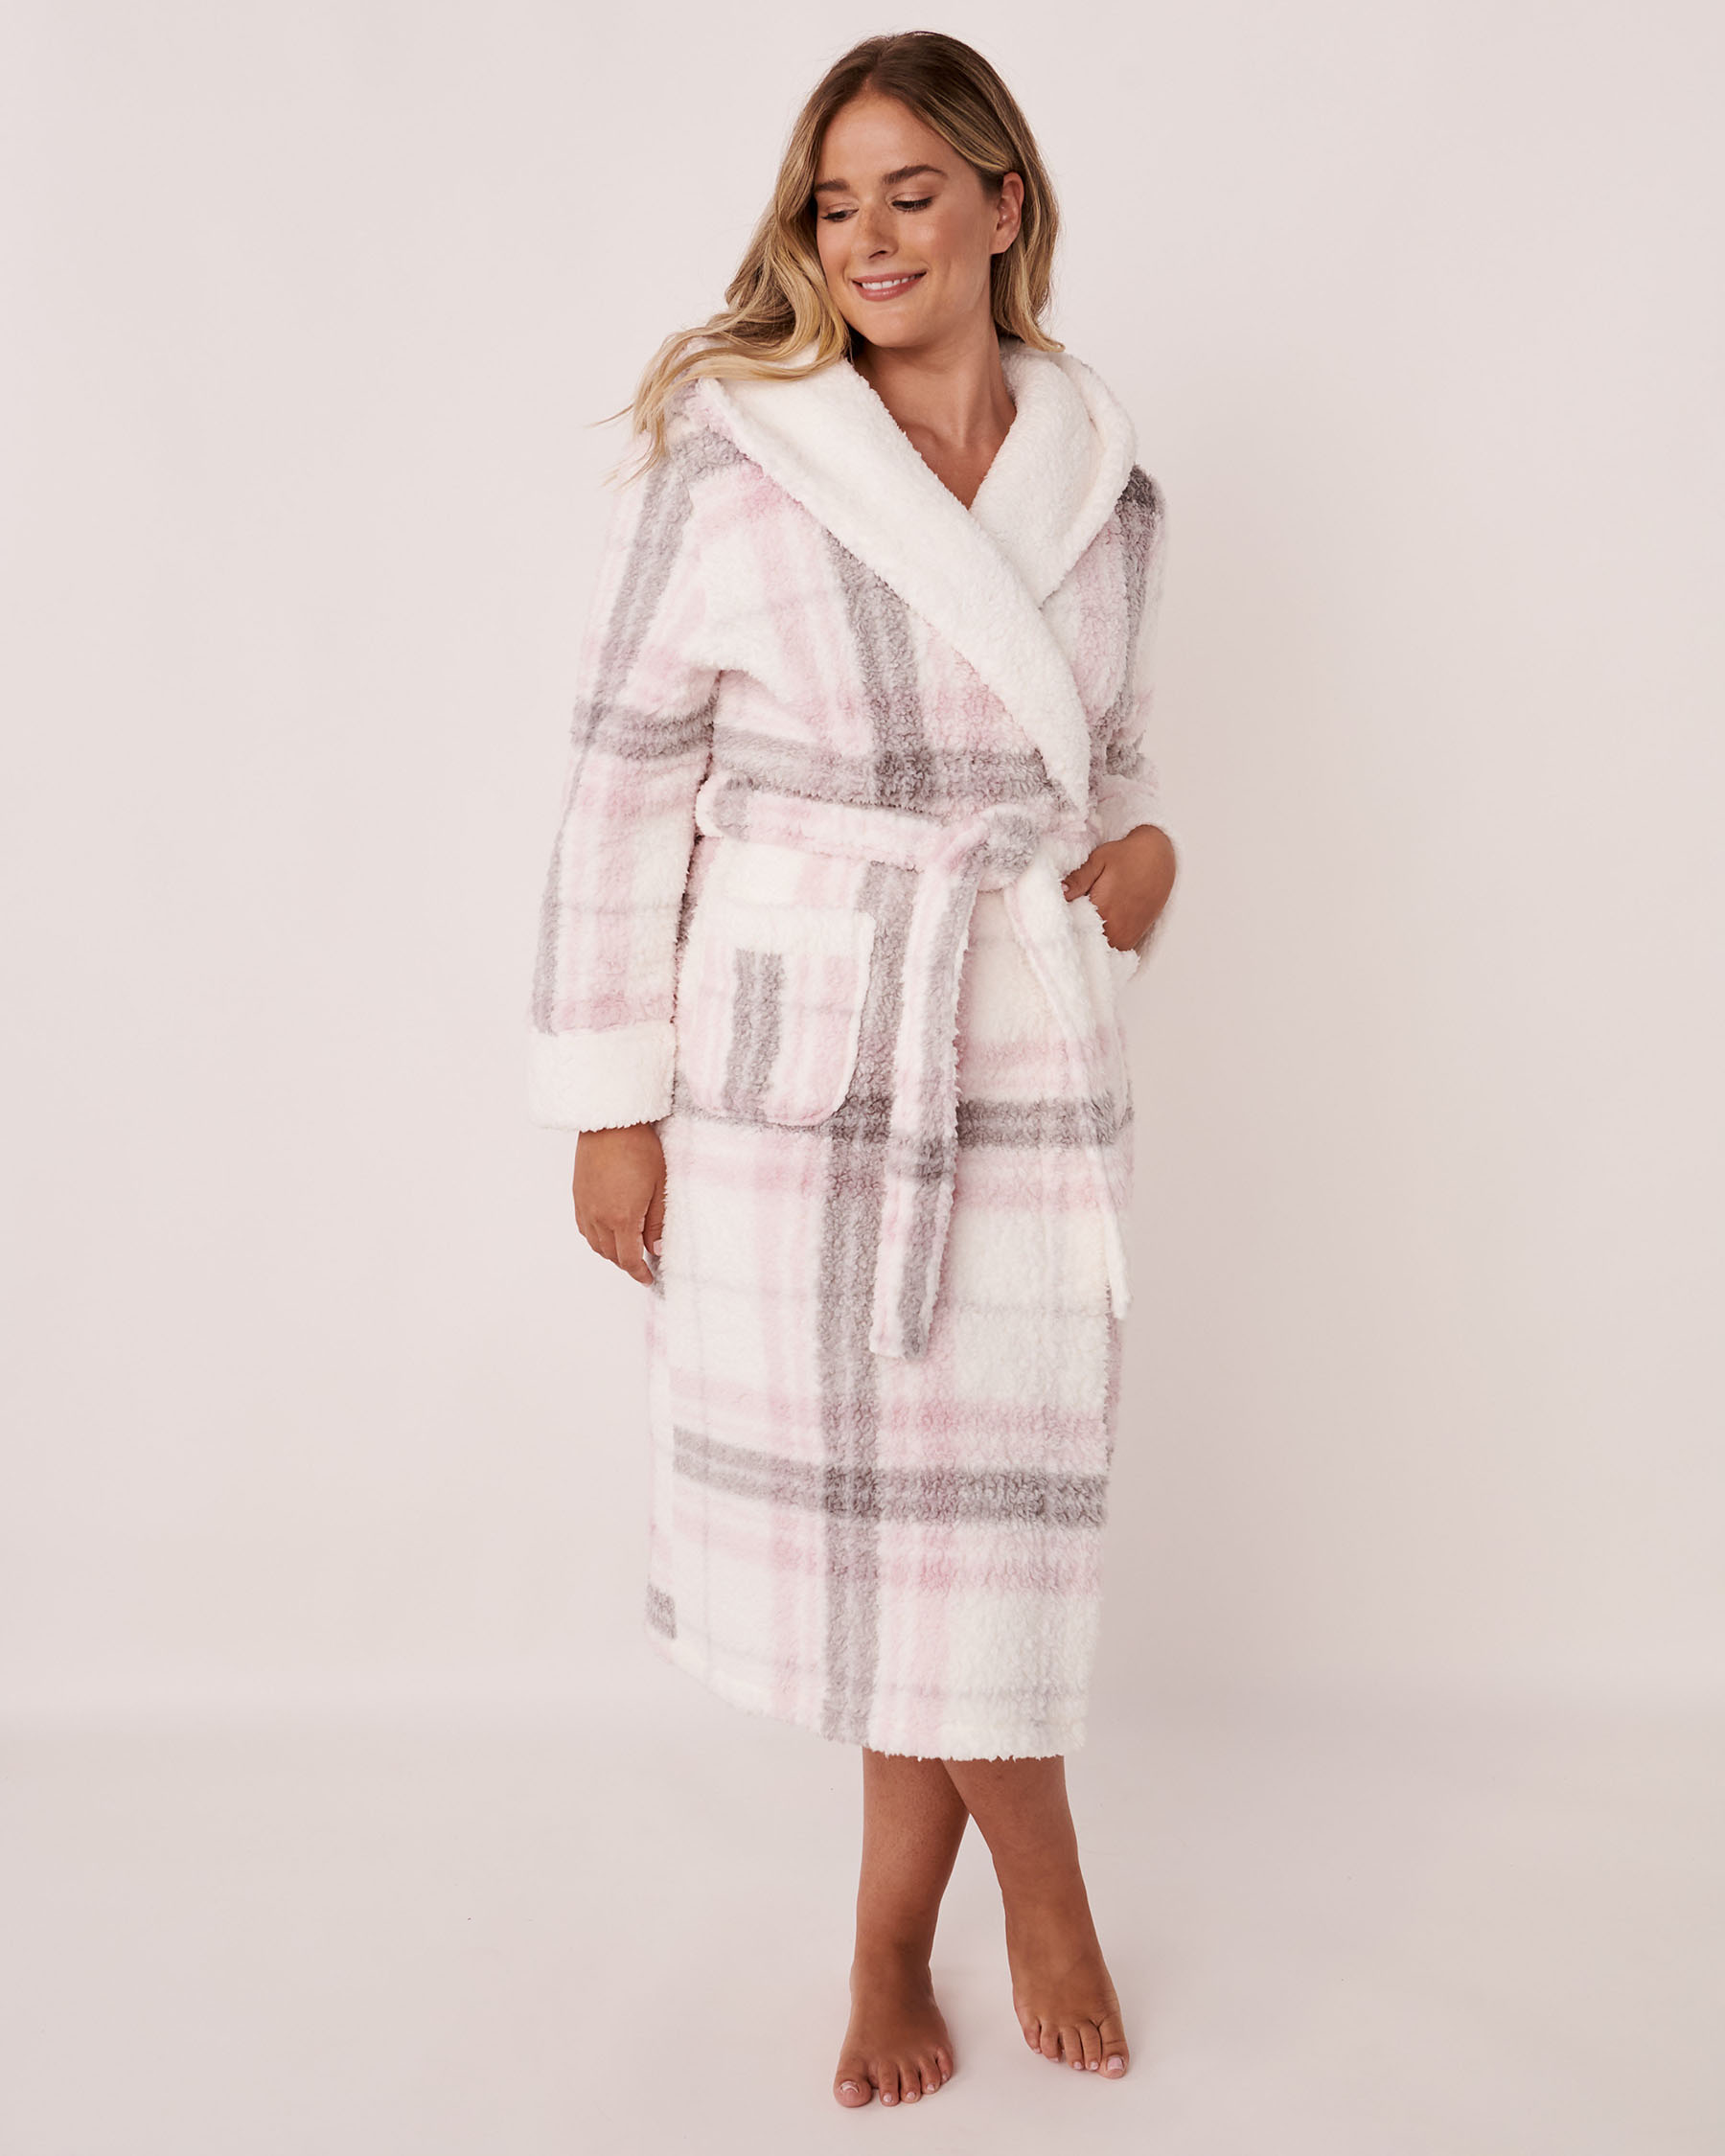 LA VIE EN ROSE Sherpa Hooded Robe Grey and pink plaid 40600108 - View2